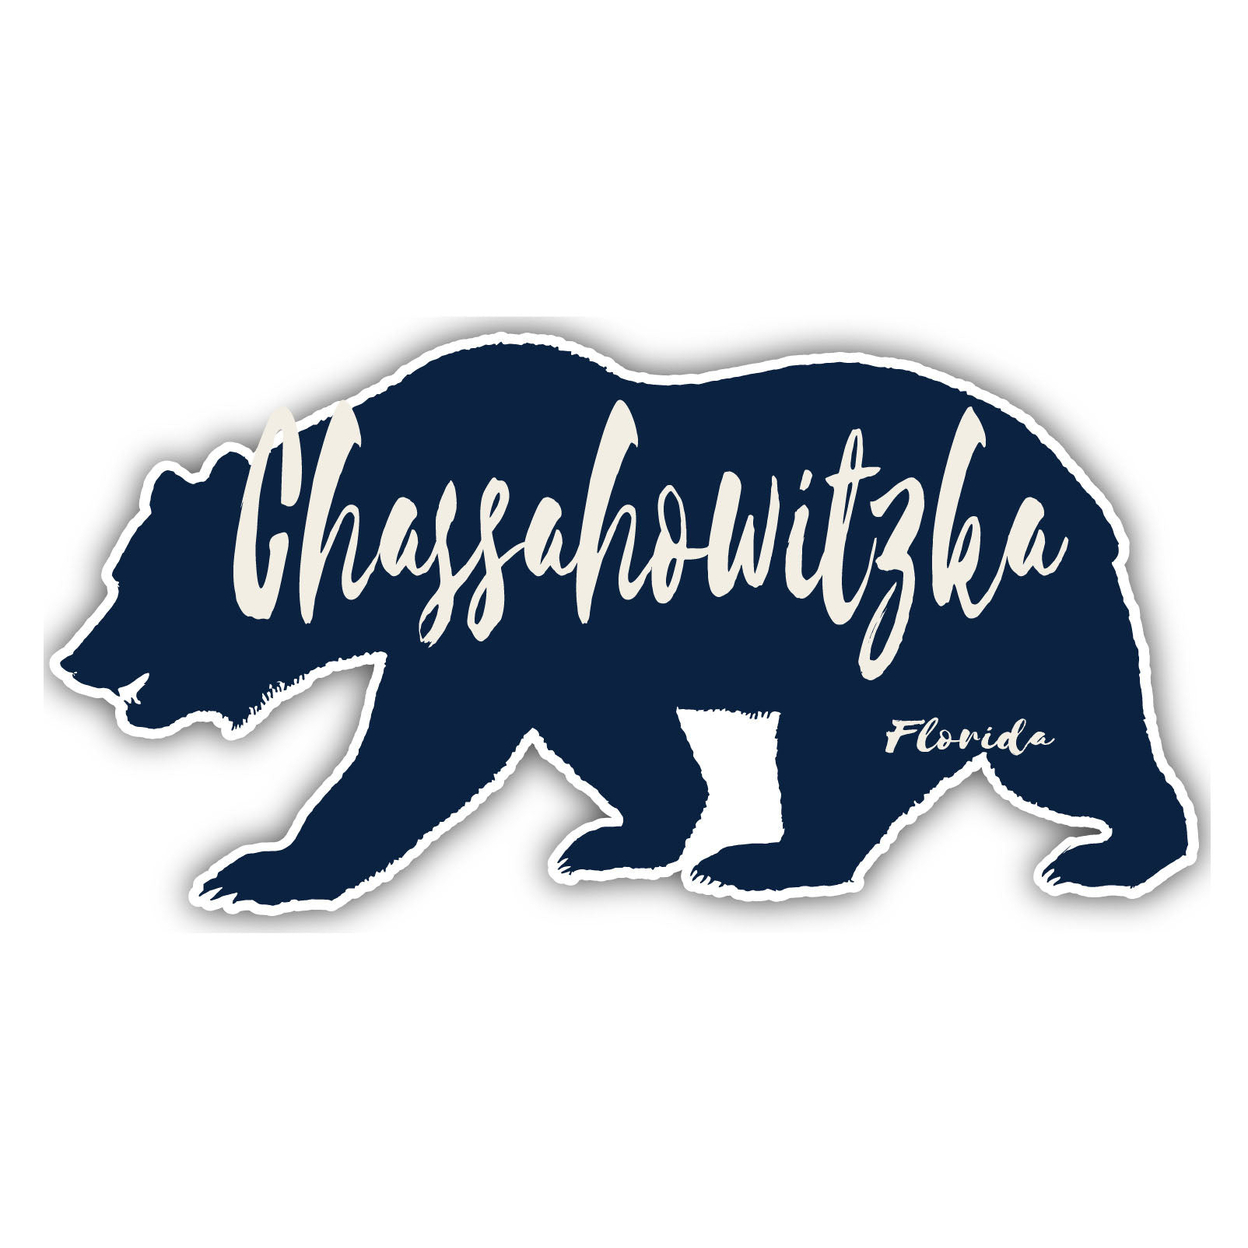 Chassahowitzka Florida Souvenir Decorative Stickers (Choose Theme And Size) - Single Unit, 2-Inch, Bear